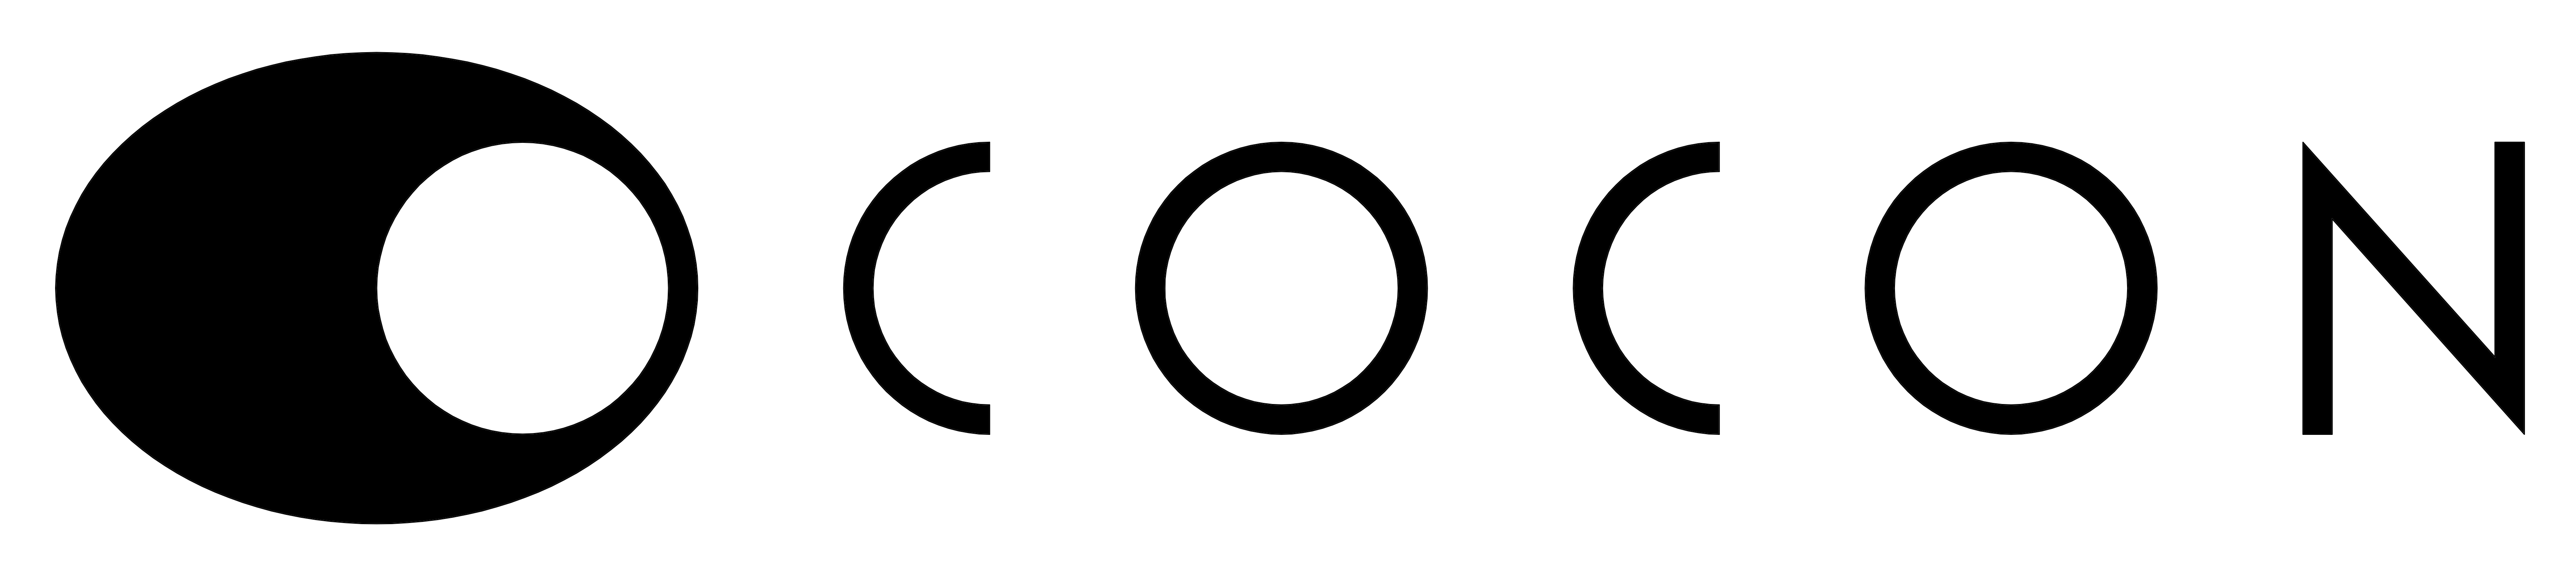 Logo for COCON studio